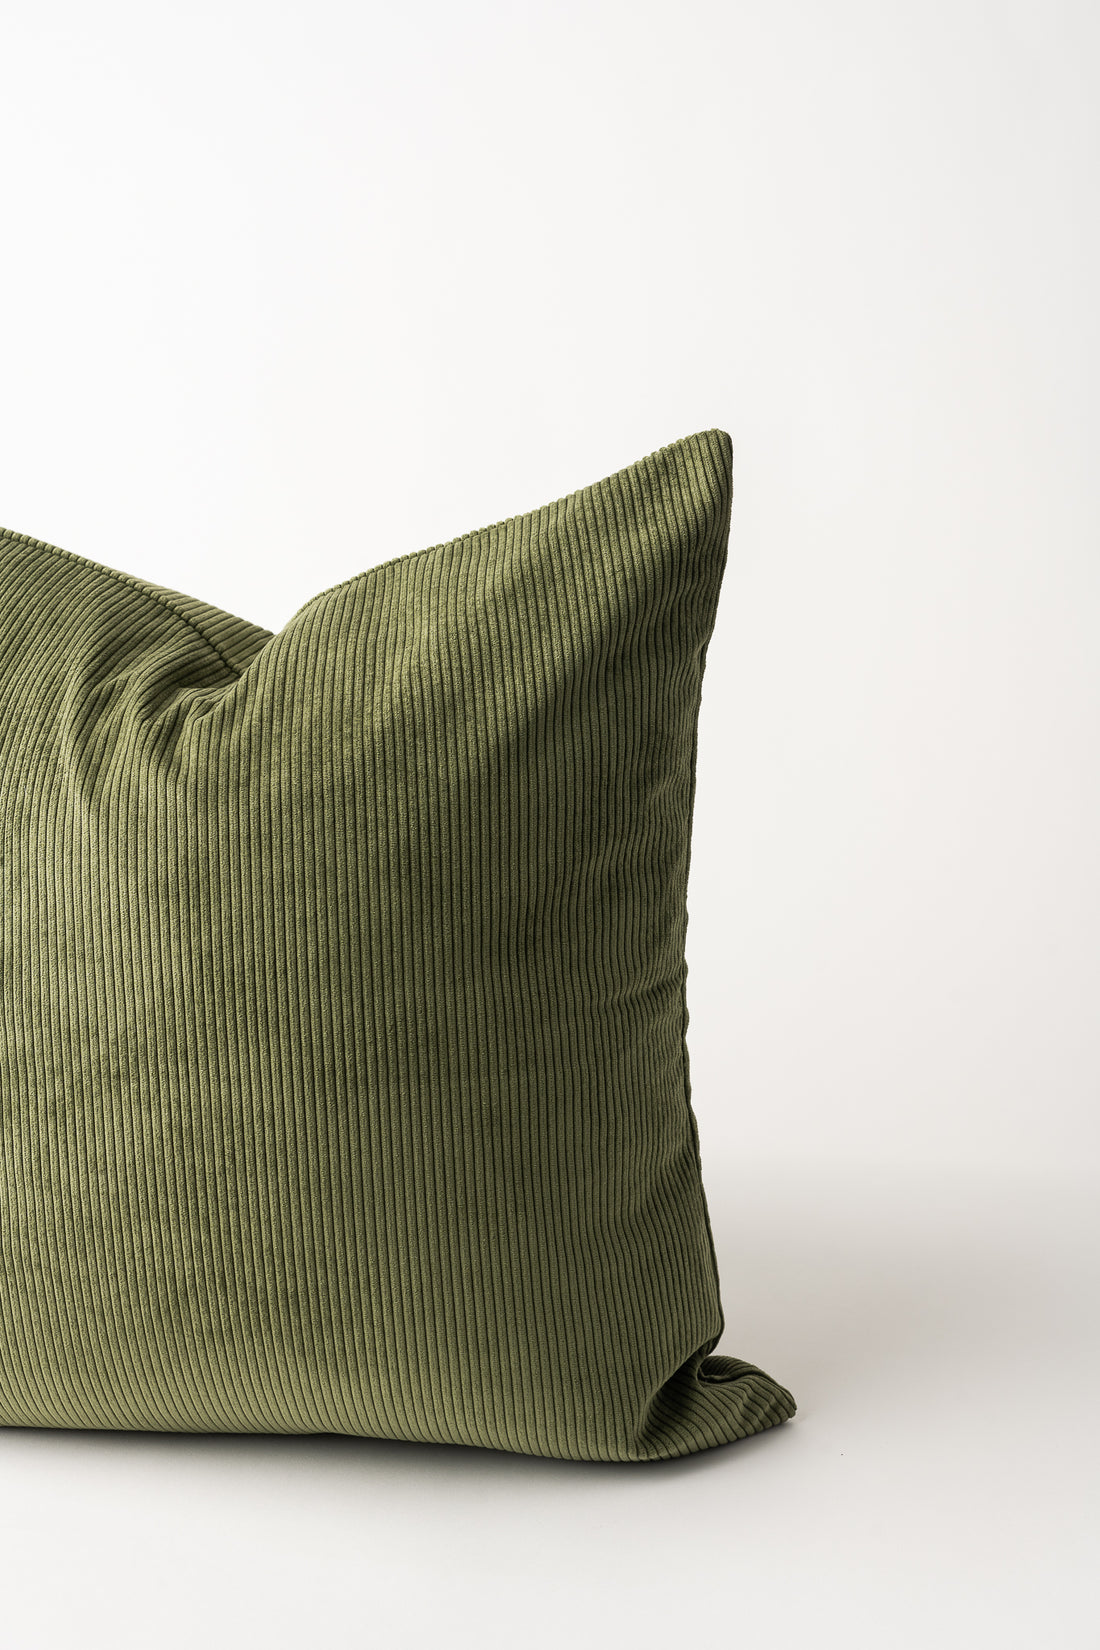 Kindred Cushion - Green Cord